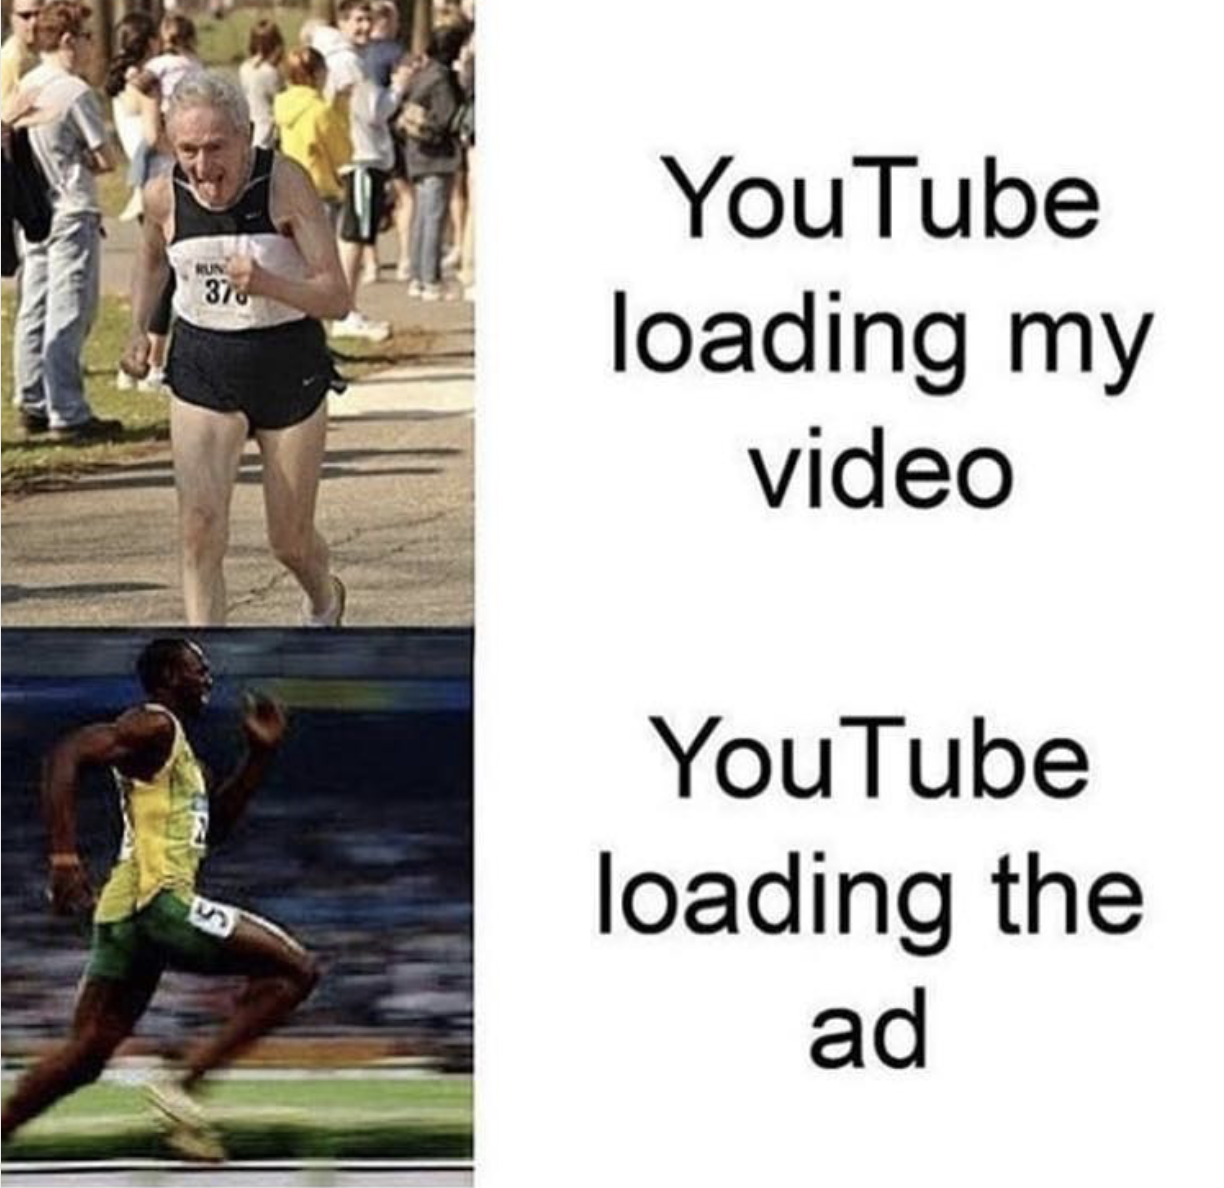 youtube loading slow meme - YouTube loading my video YouTube loading the ad